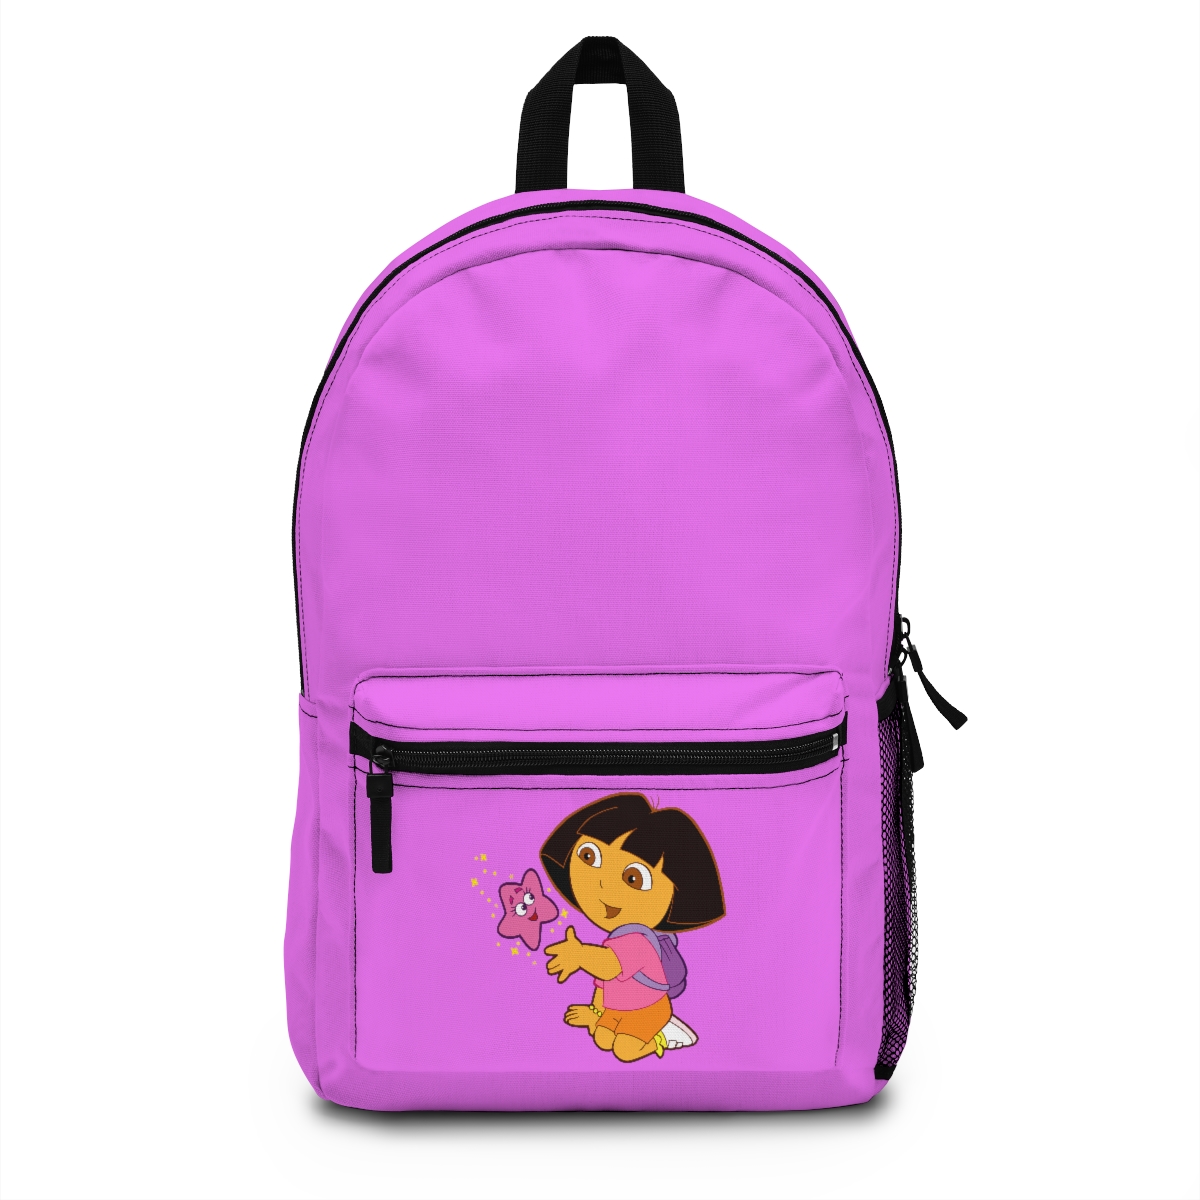 Dora backpack - Dora The Explorer backpack - Dora The Explorer bookbag - Dora The Explorer merch - Dora The Explorer apparel